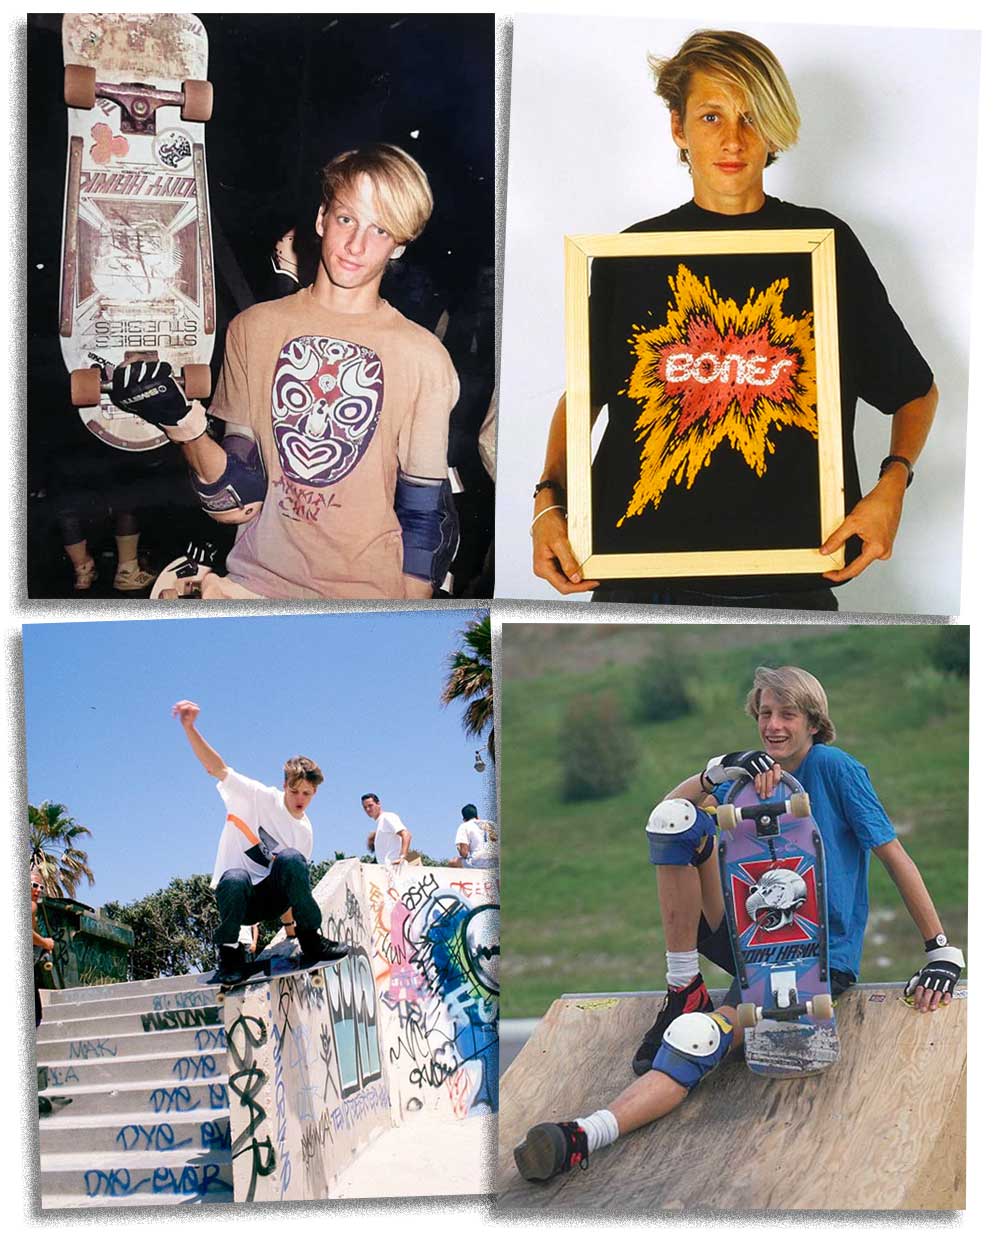 Tony Hawk Skater Punk fashion